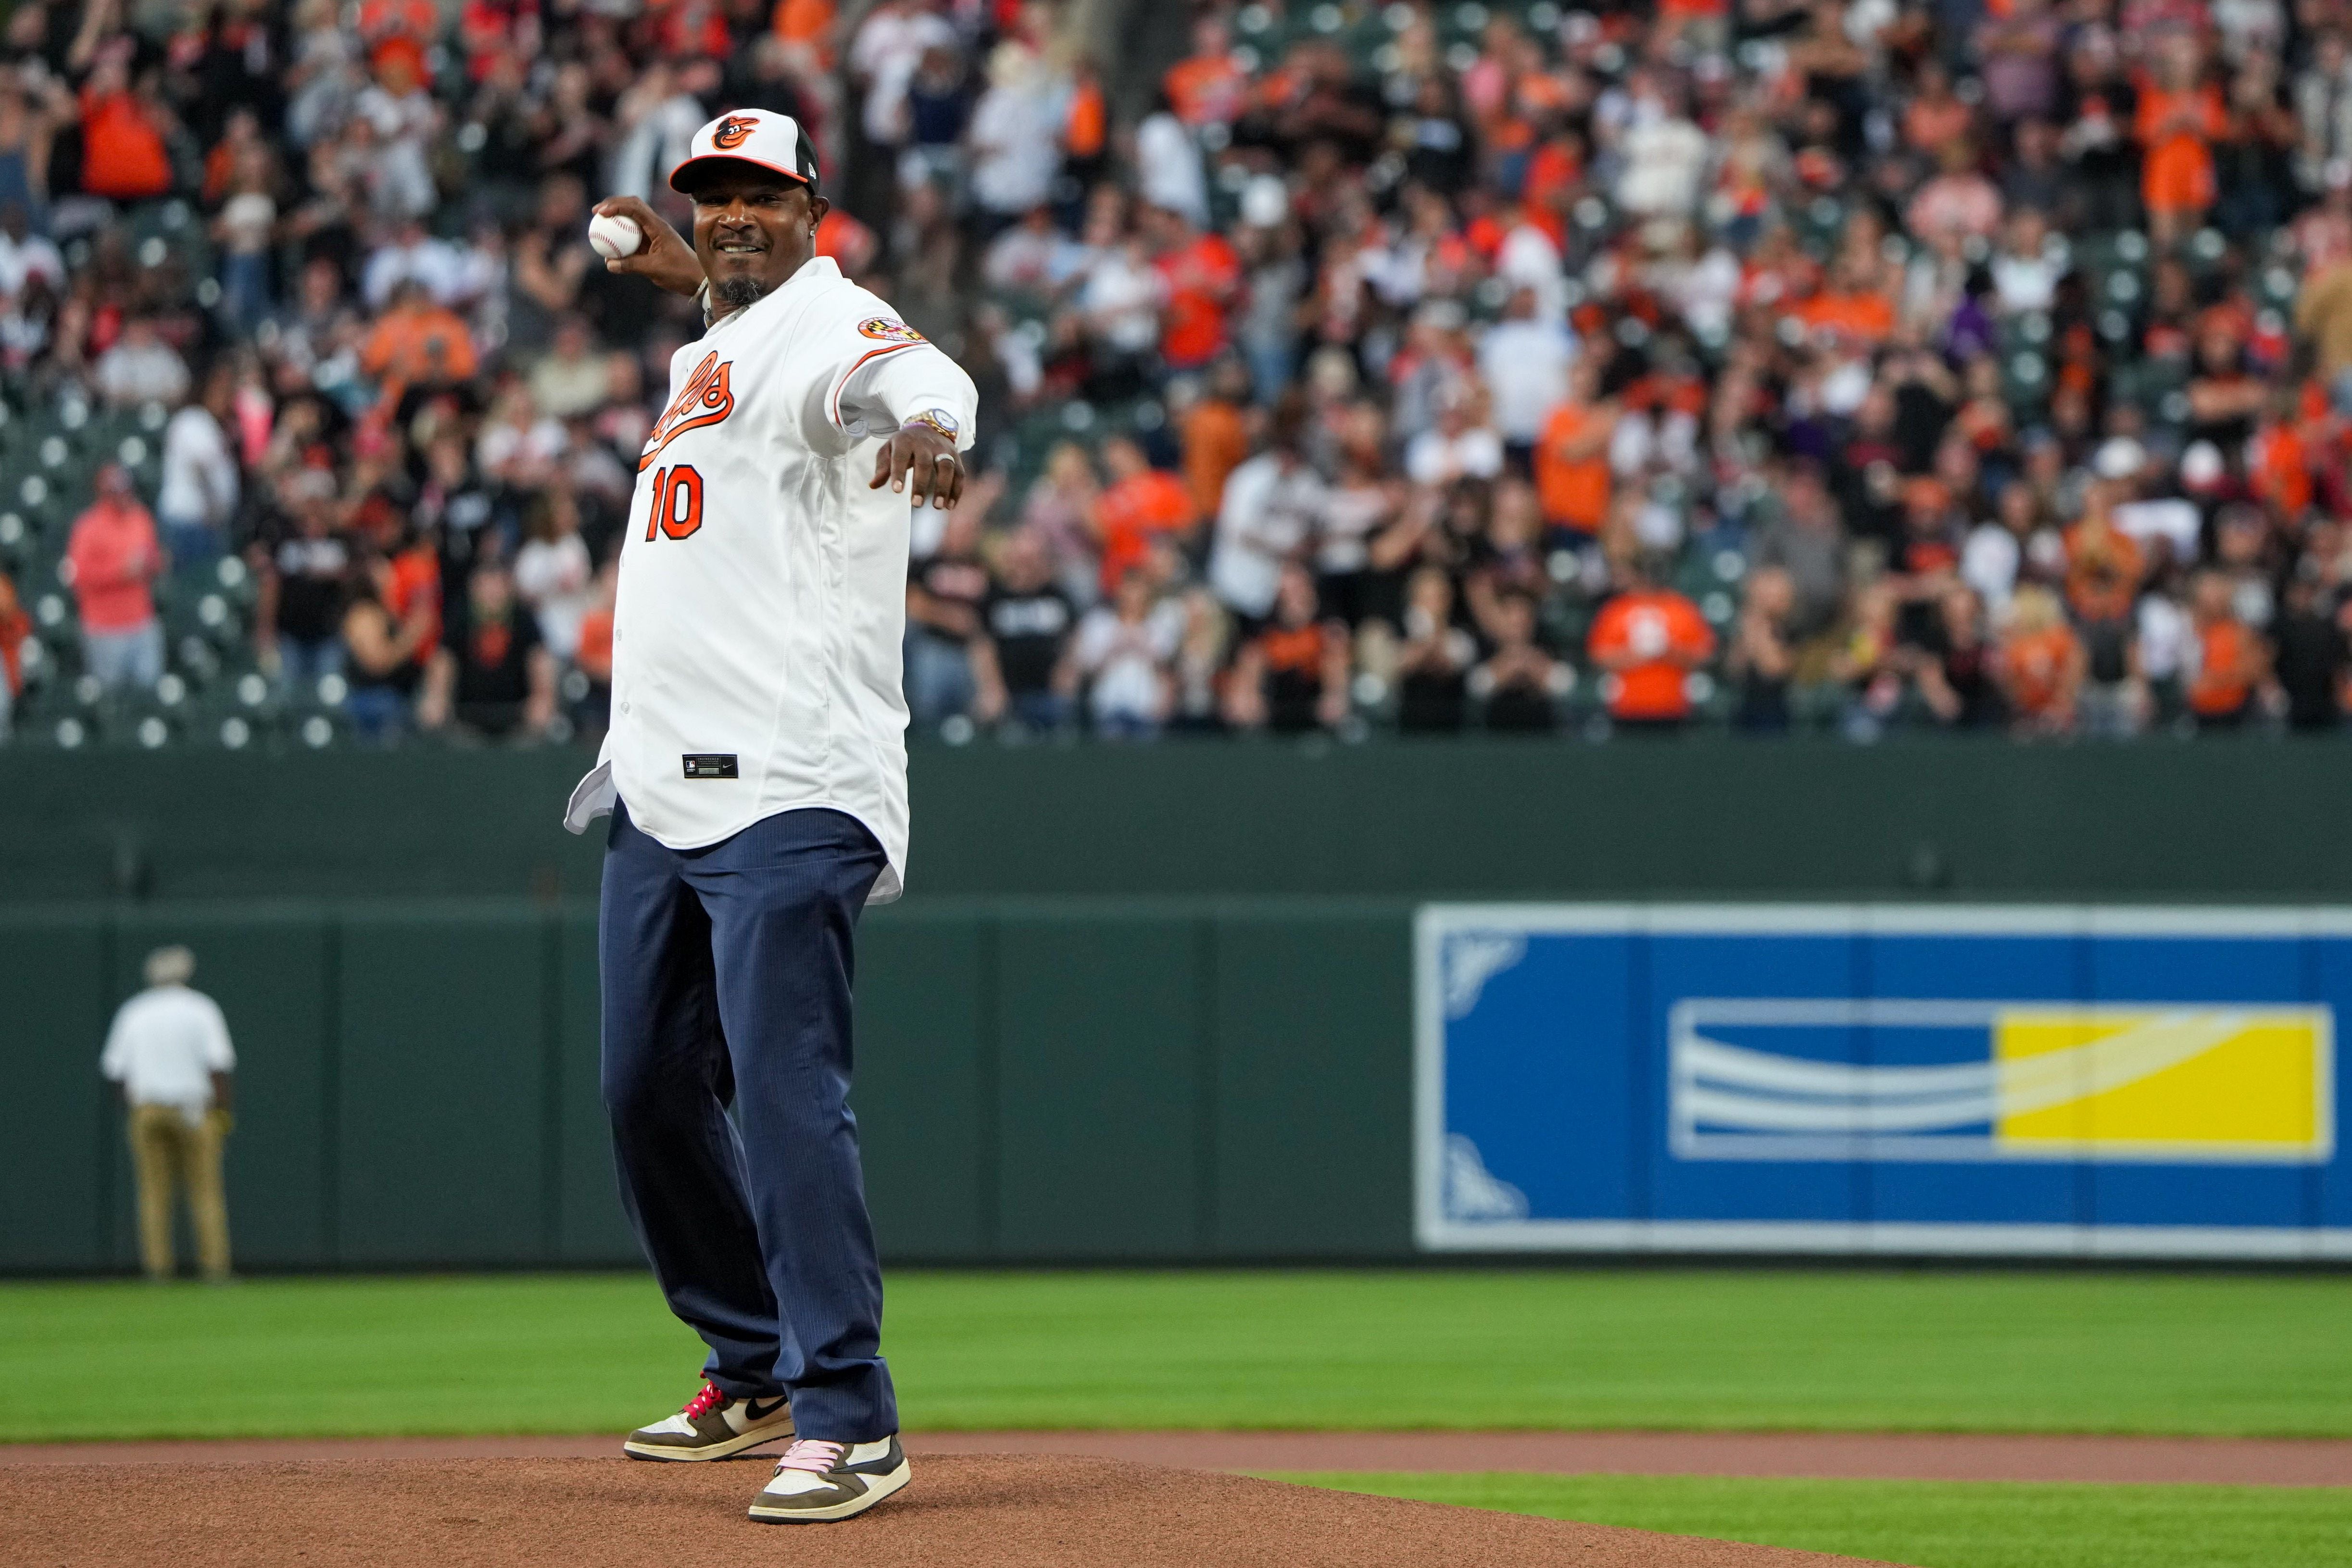 Orioles icon Adam Jones officially retires with Baltimore: 'I'm